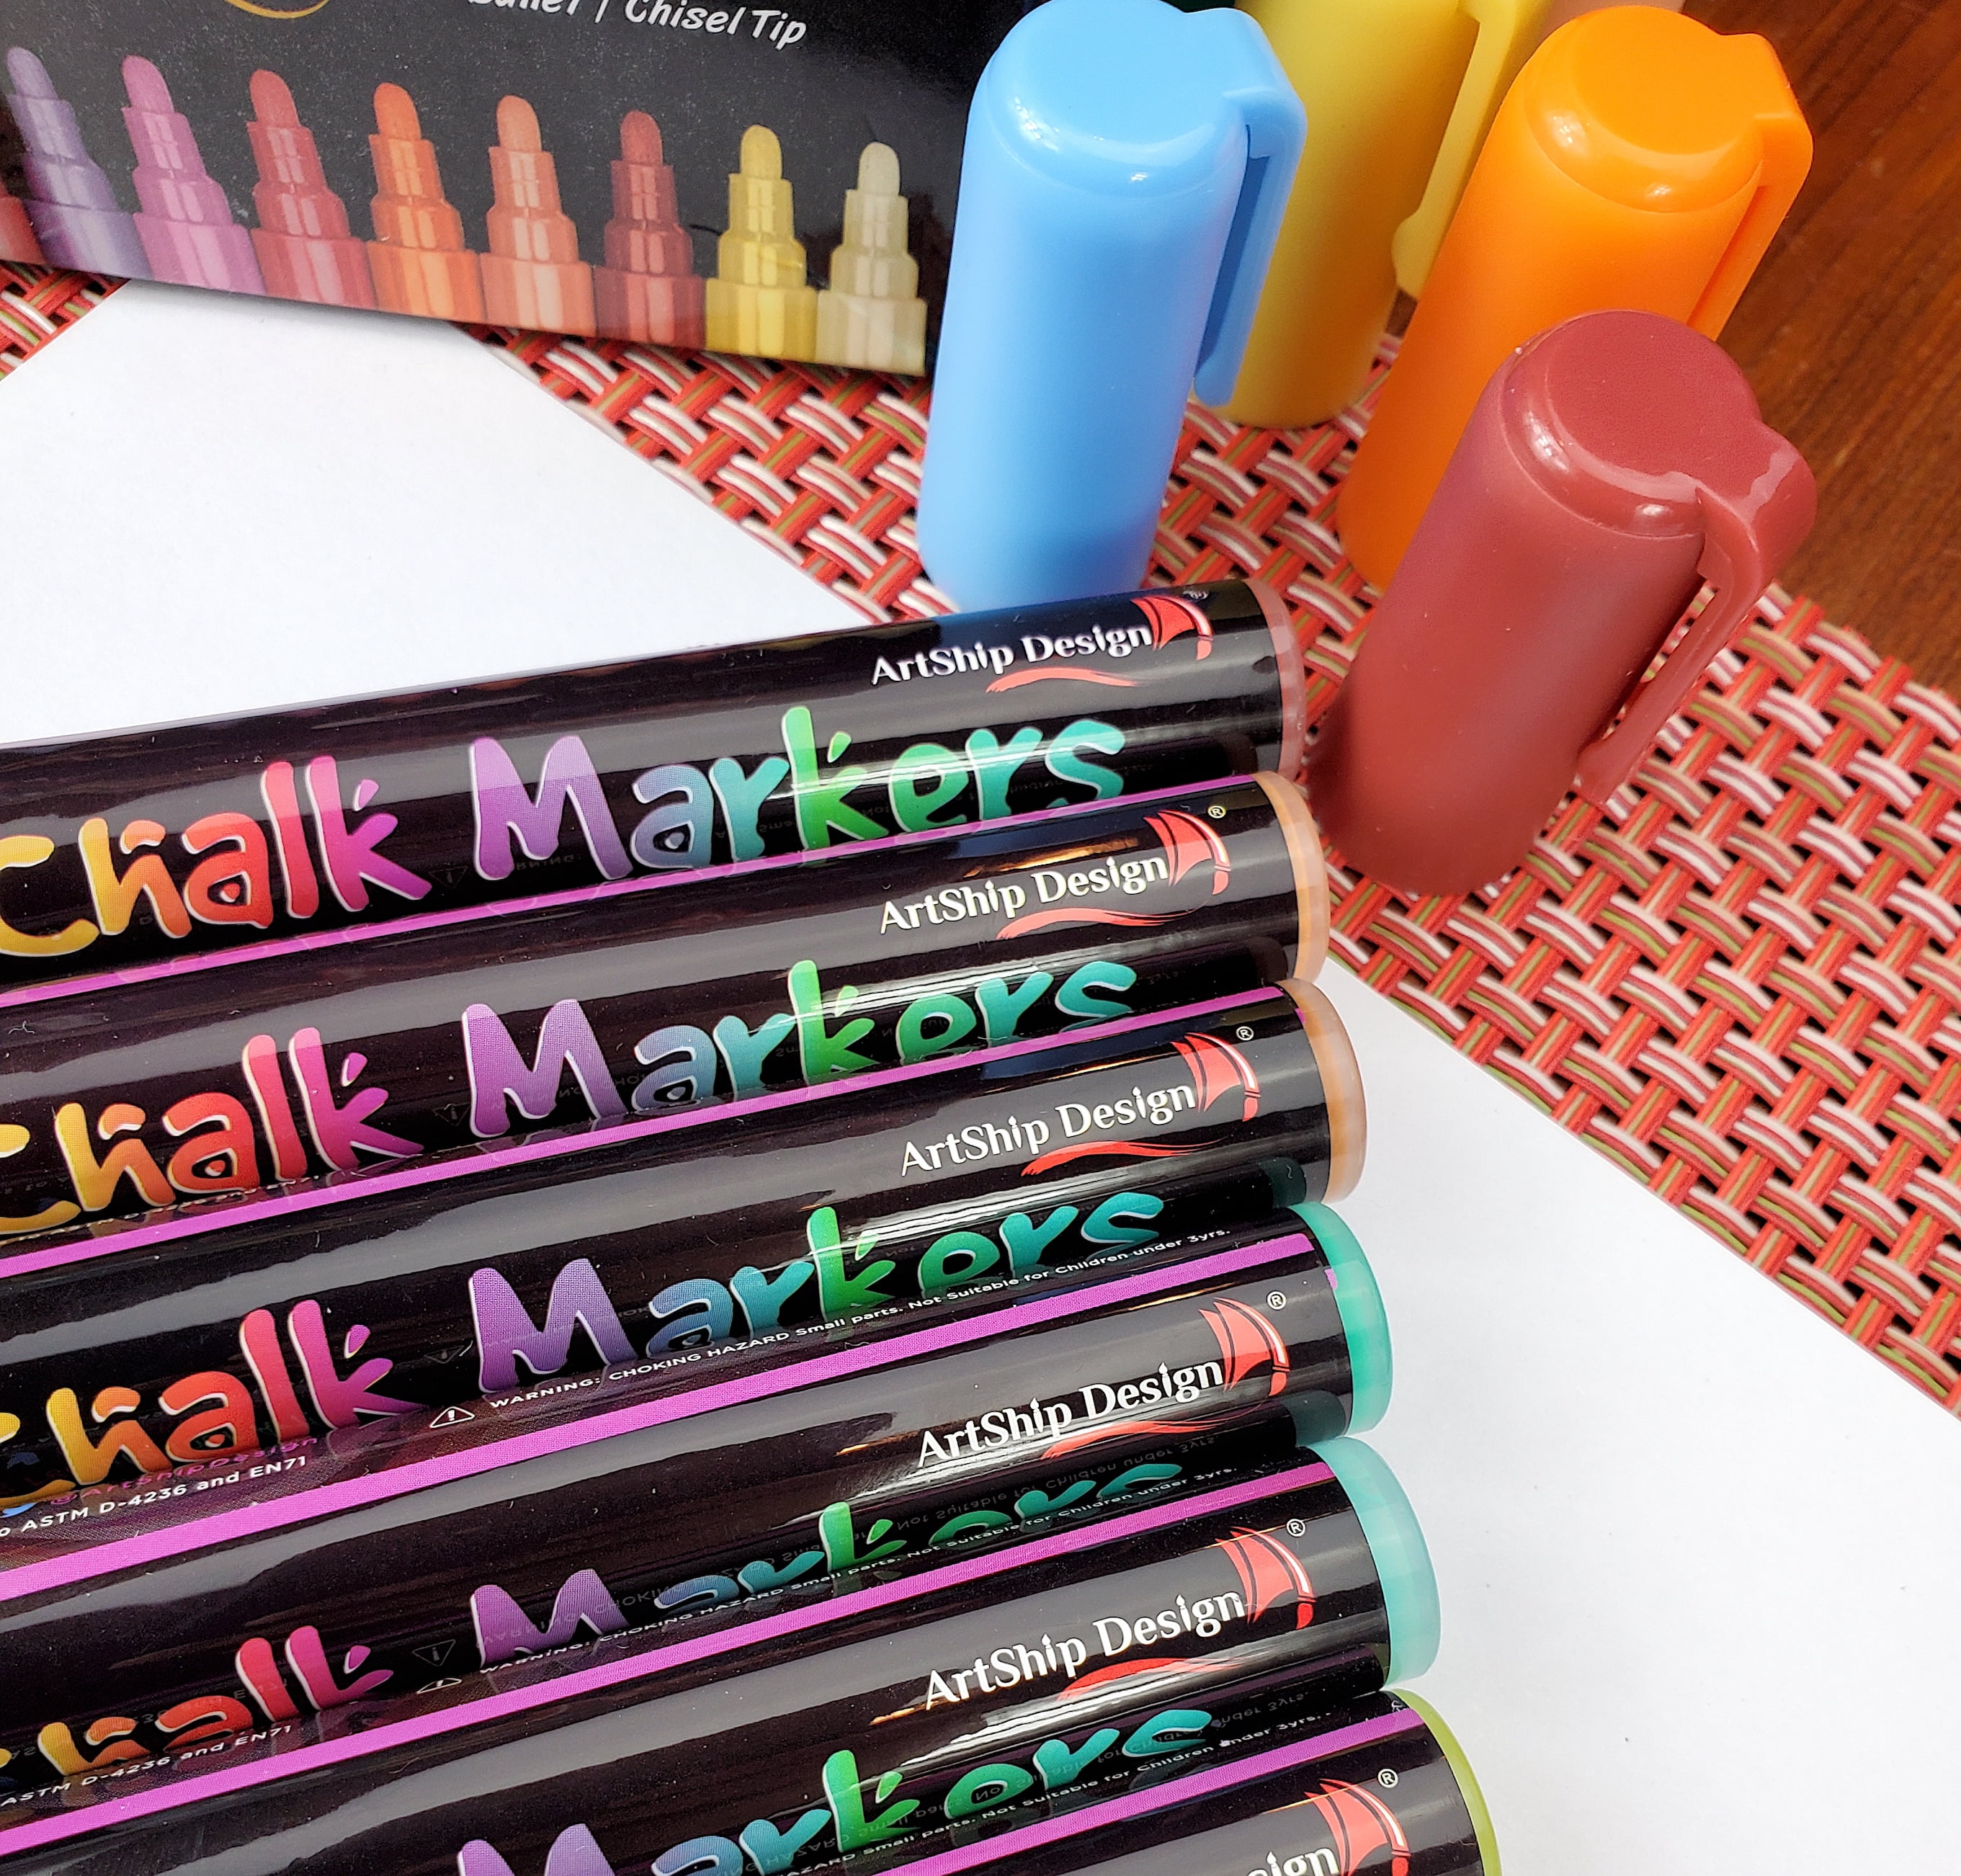 Neon Liquid Chalk Markers - Set of 12 – dmcreative